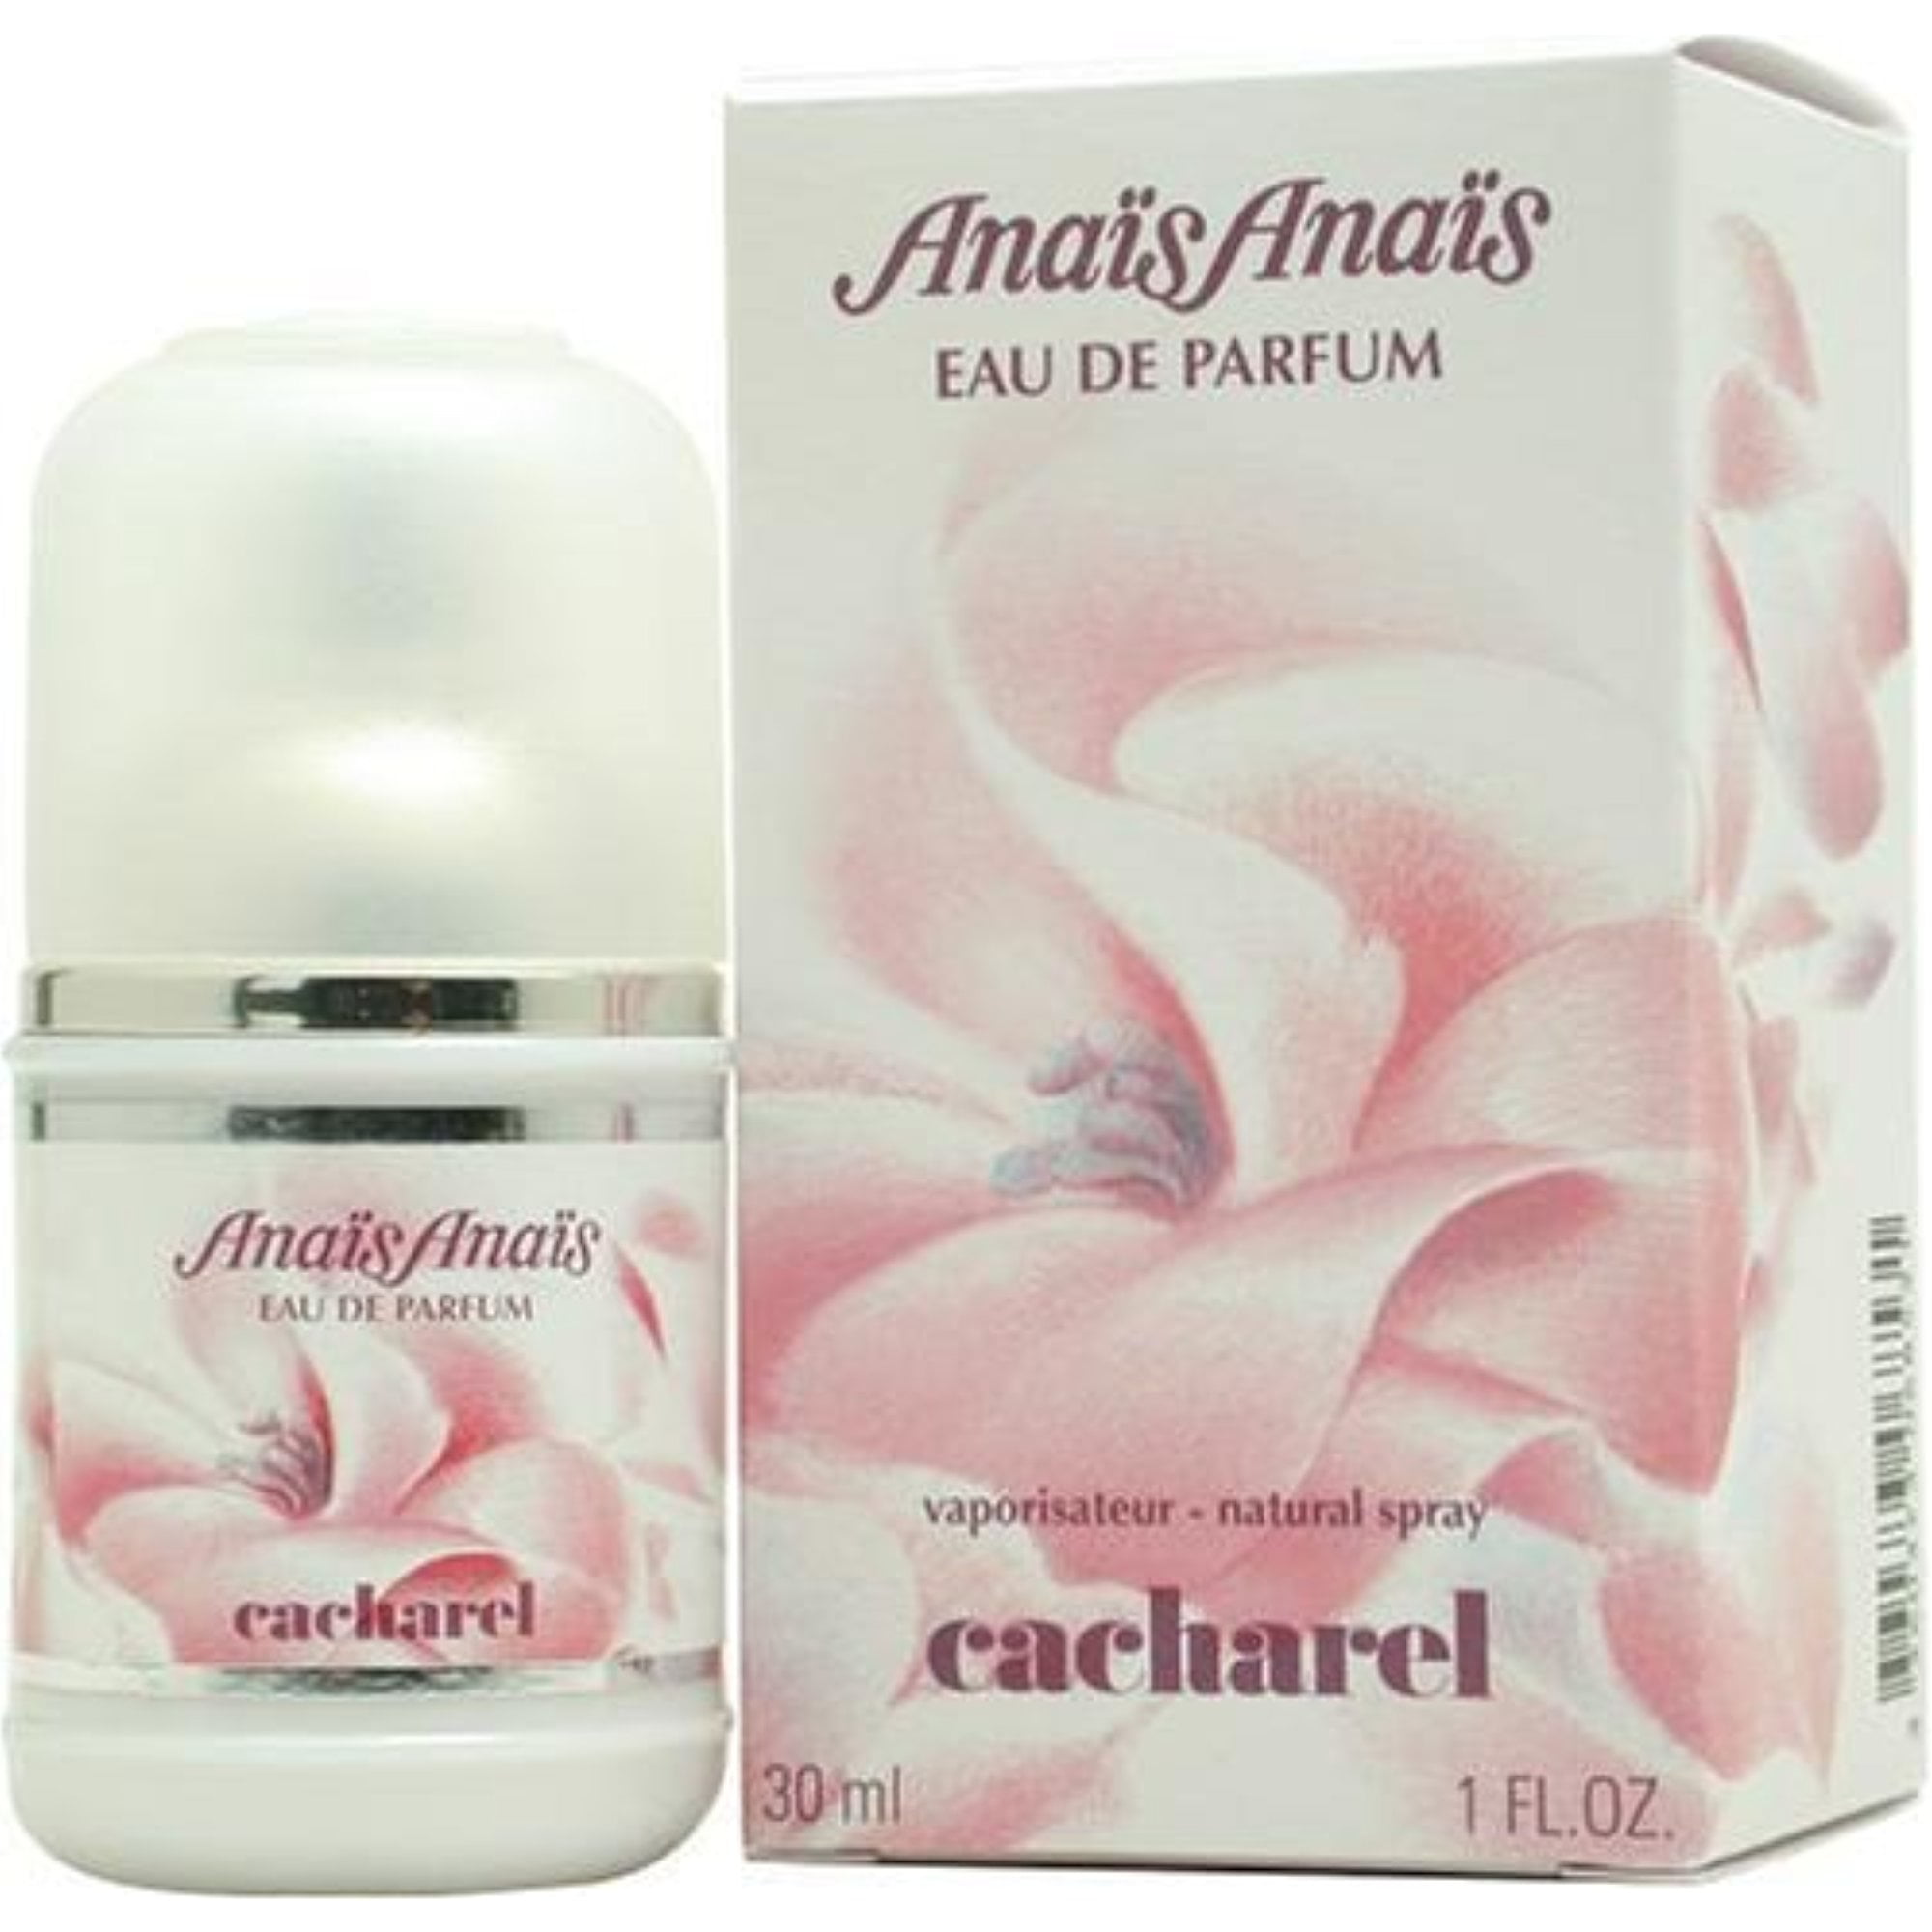 Anais Anais By Cacharel For Women, Eau Parfum Spray, 1-Ounce Bottle - Walmart.com